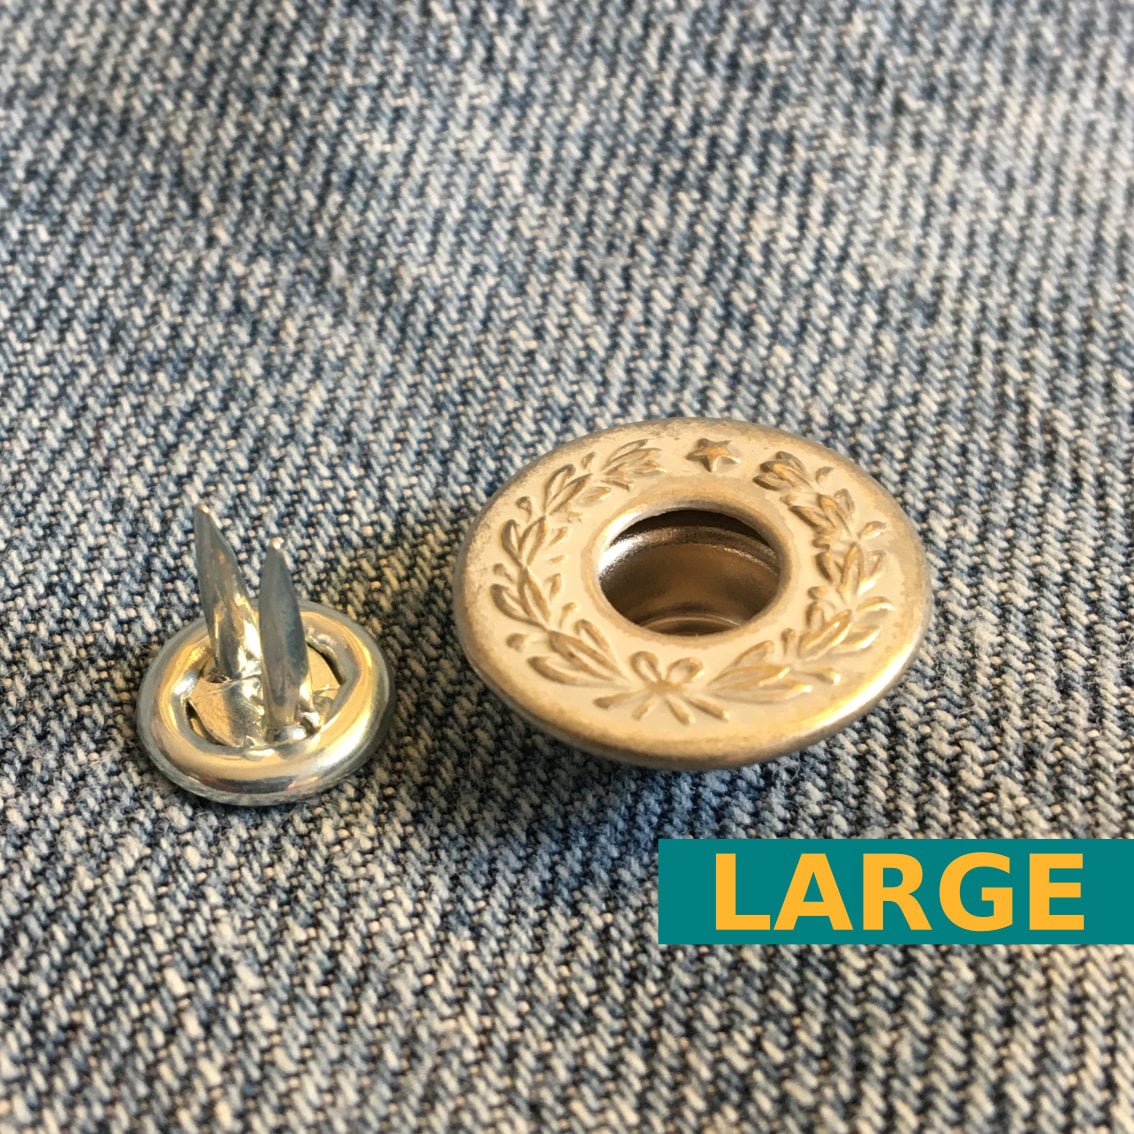 1pc Adjustable Denim Material Waist Extender Button for Jeans and Skirt,  Random Color Metal Button 2 Button Holes Button Extender